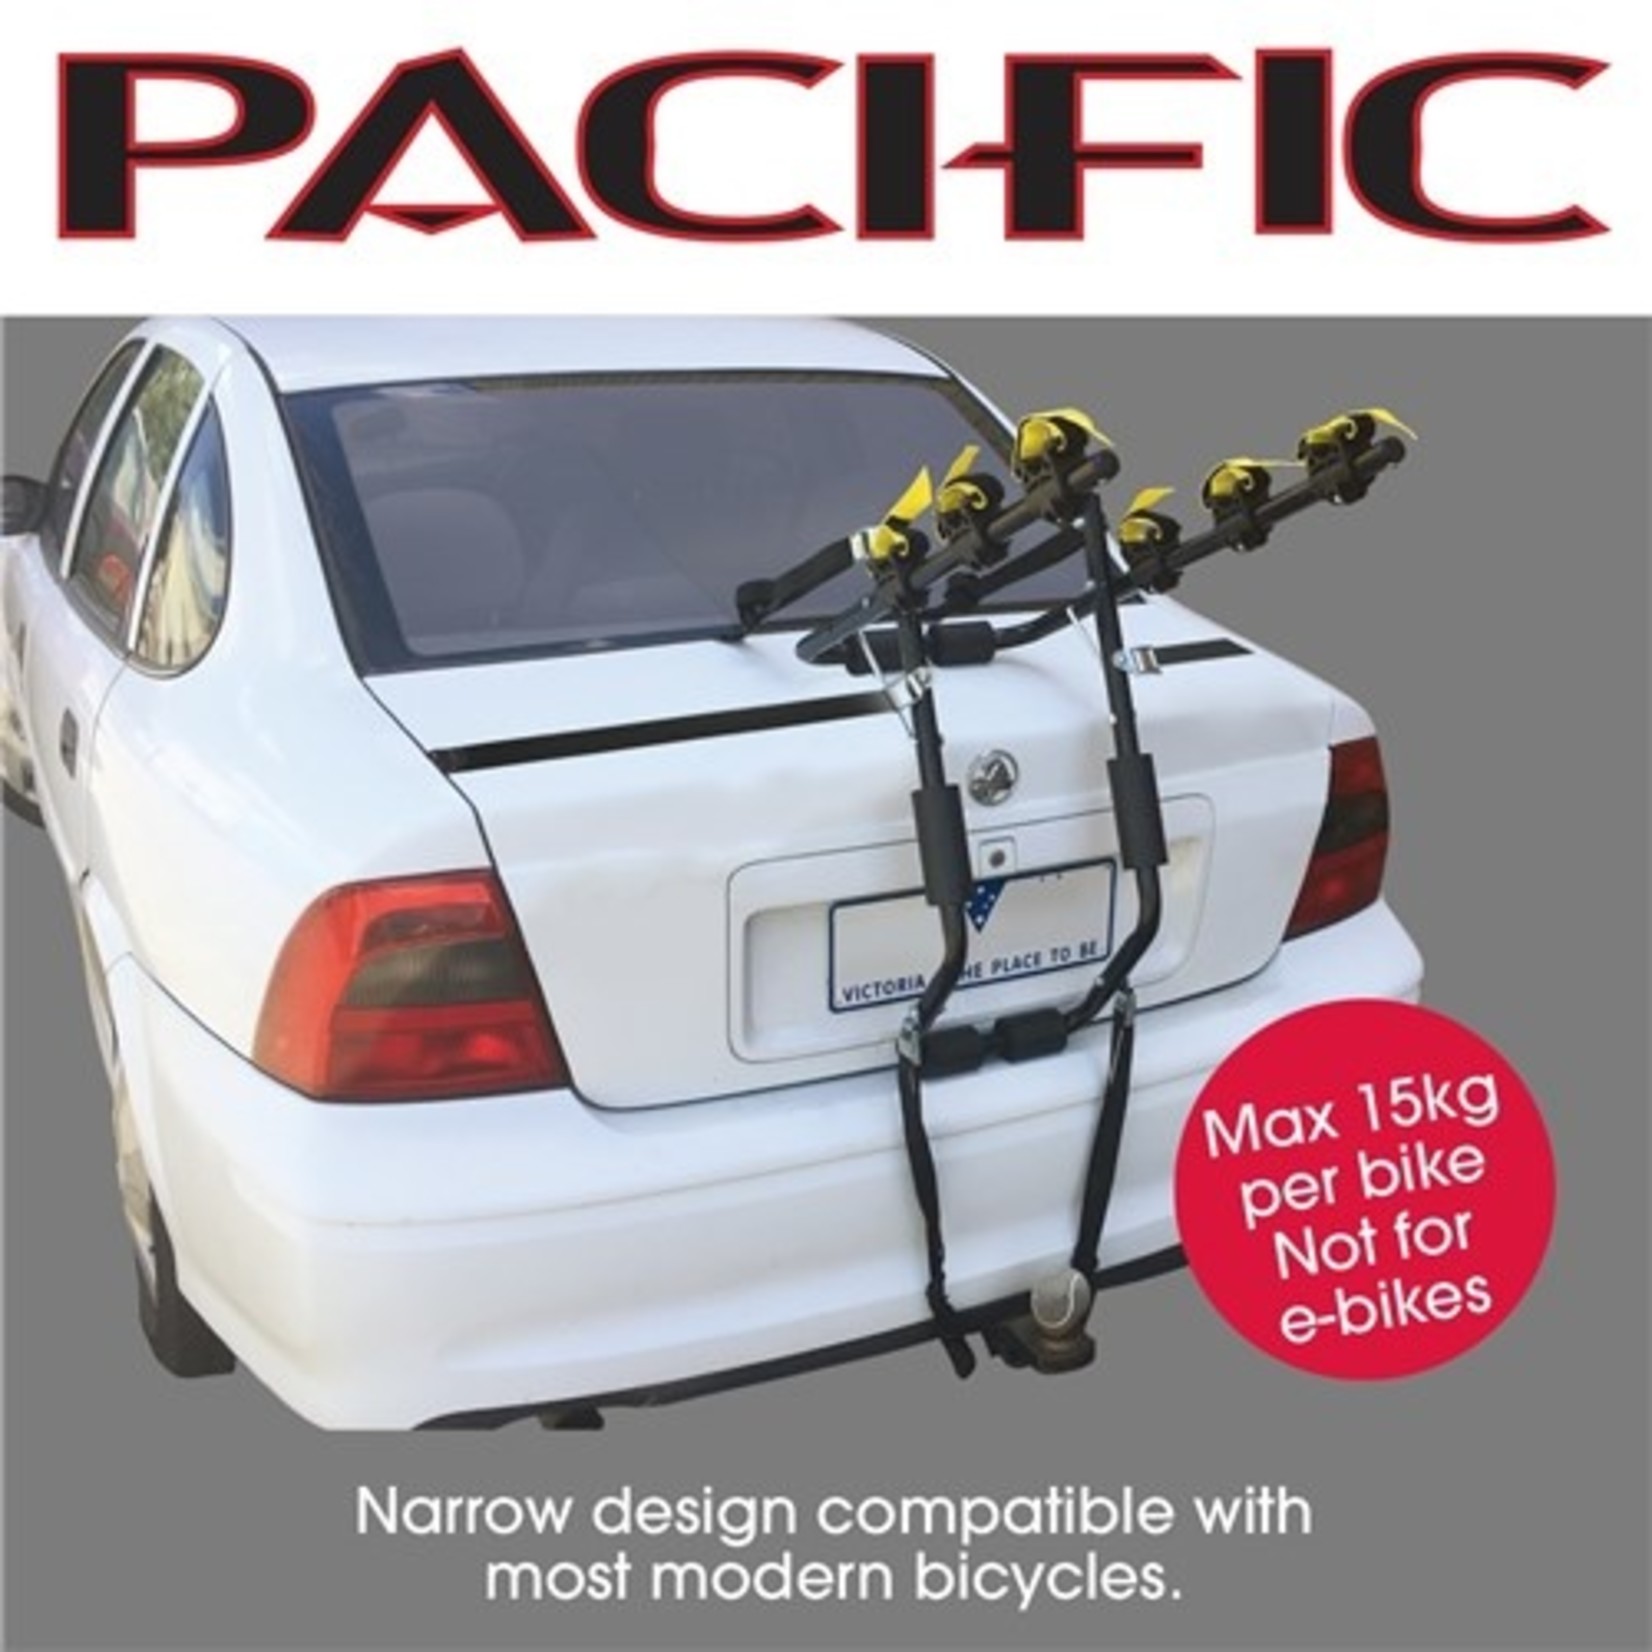 pacific Pacific Bike/Cycling 3 Bike Carrier Boot Rack - Narrow - Maximum 15kg Per Bike